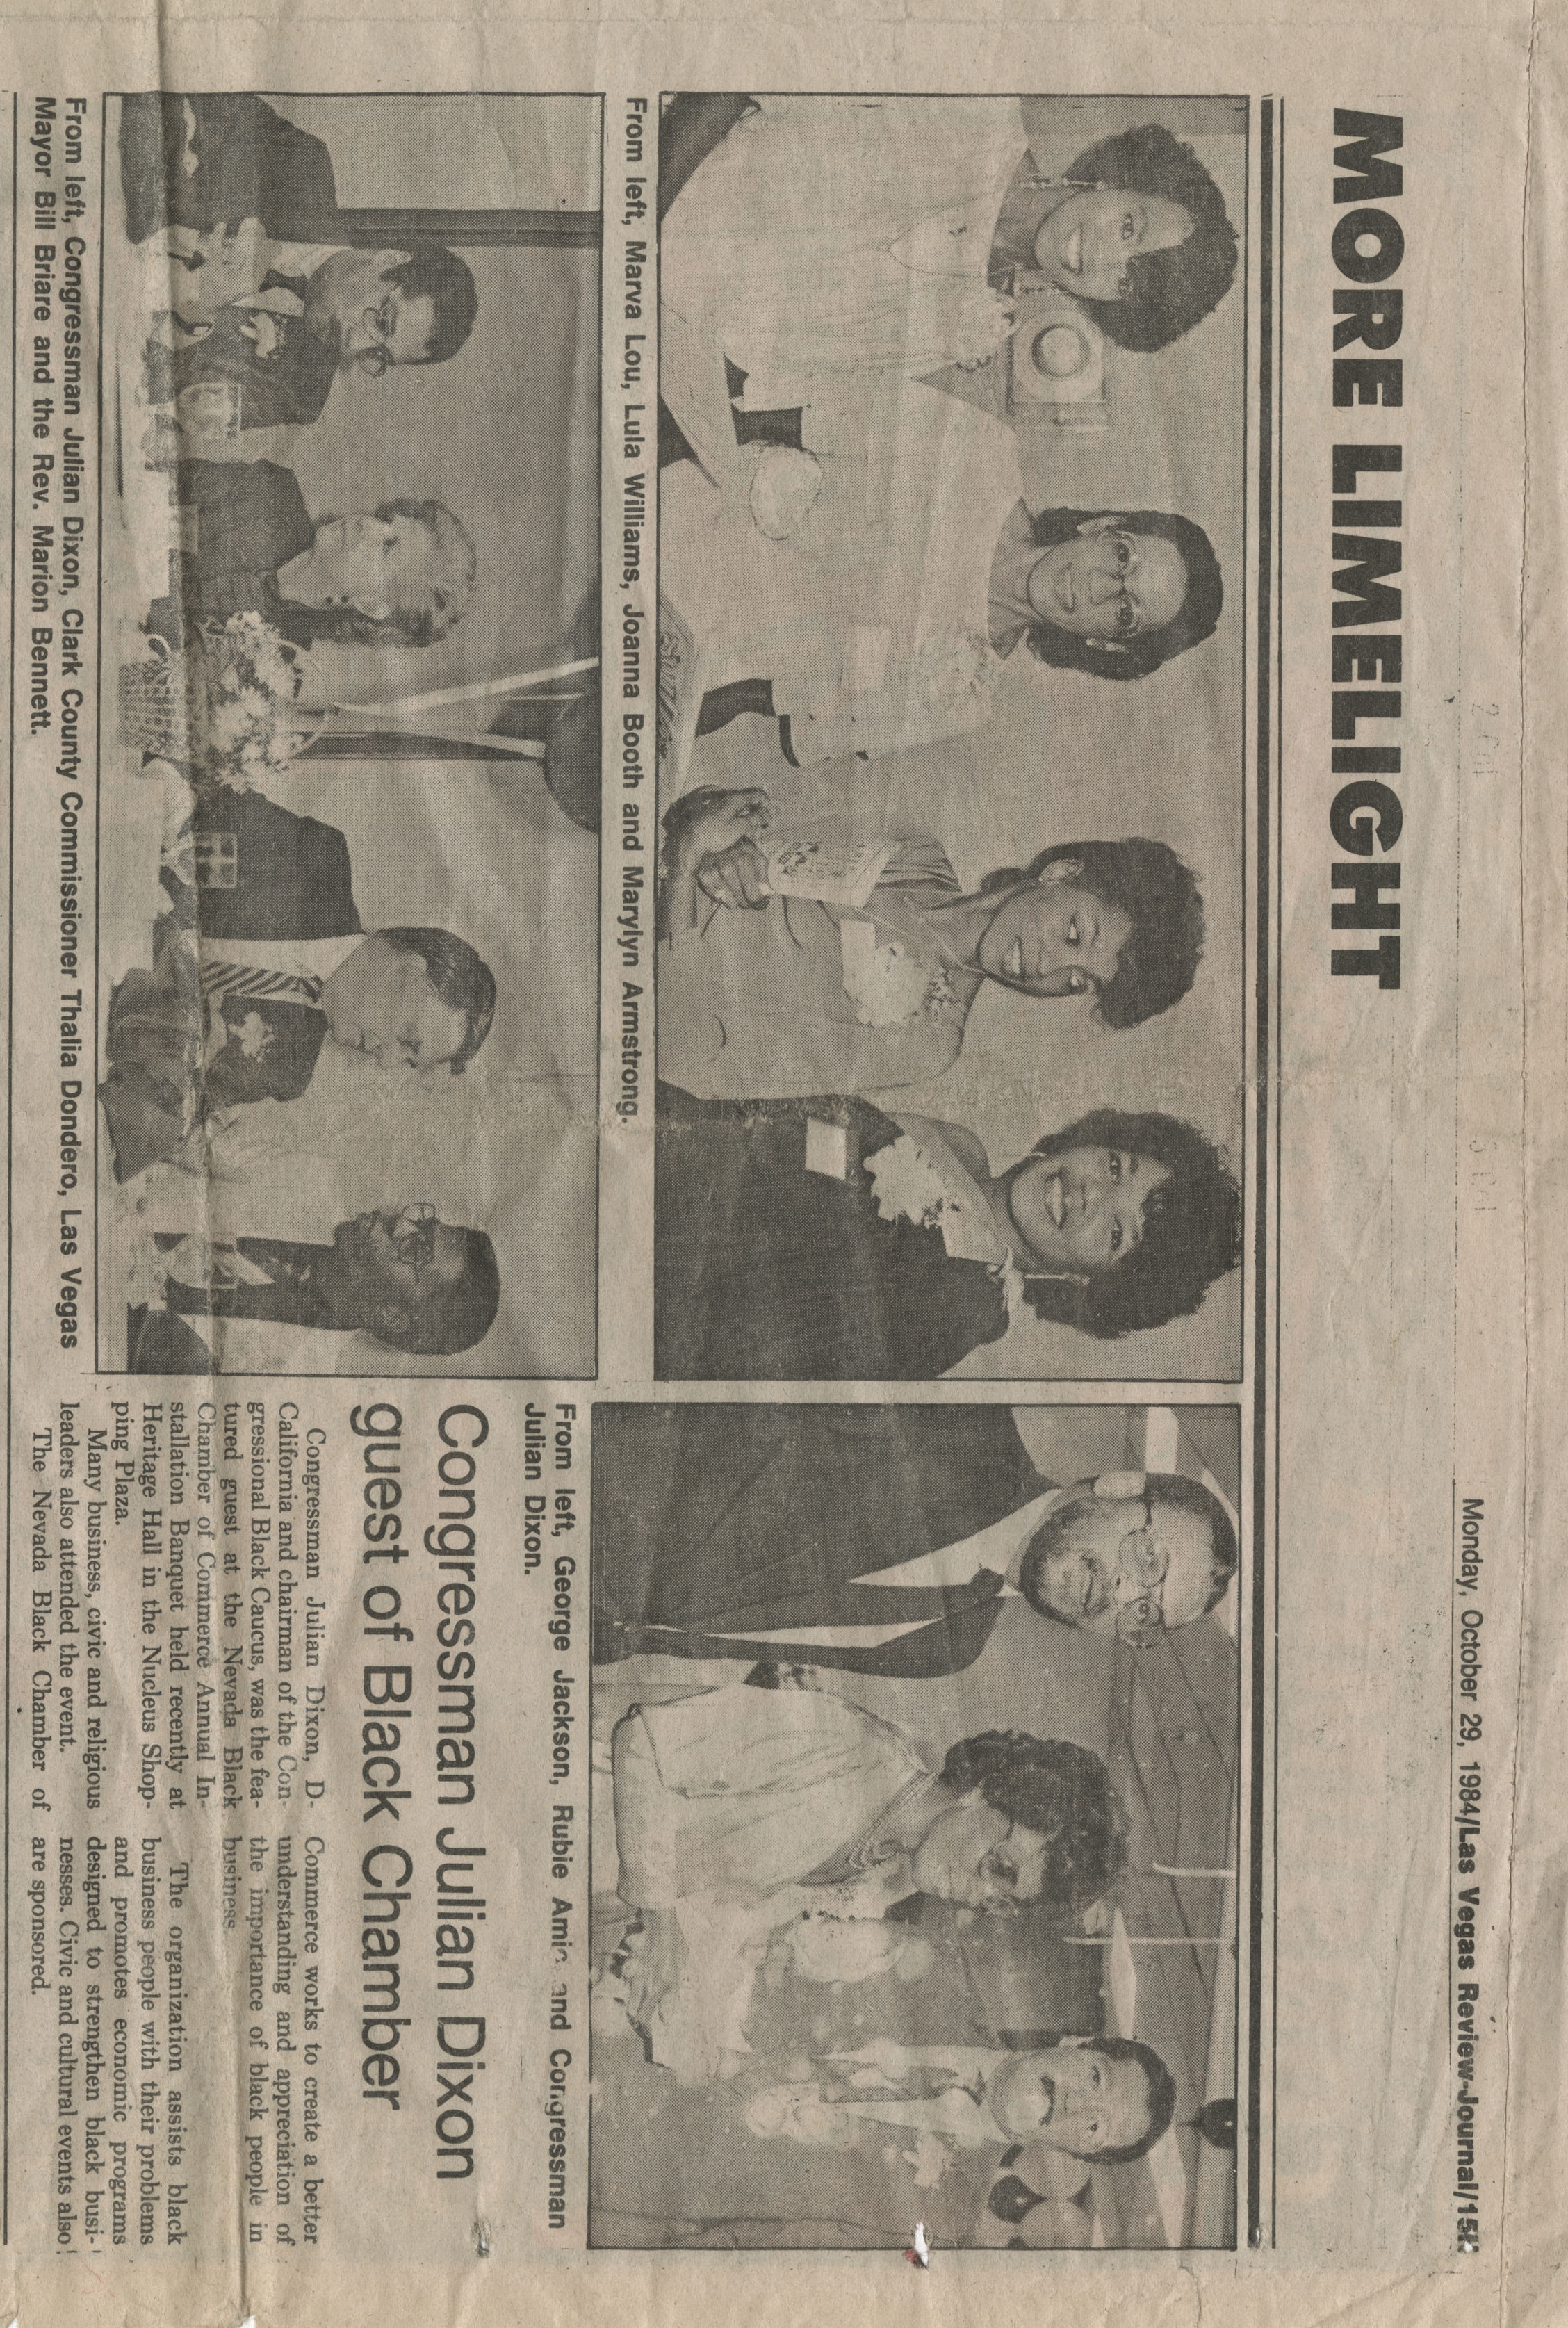 Newspaper clipping, Congressman Julian Dixon guest of Black Chamber, More Limelight Section, Las Vegas Review-Journal, October 29, 1984